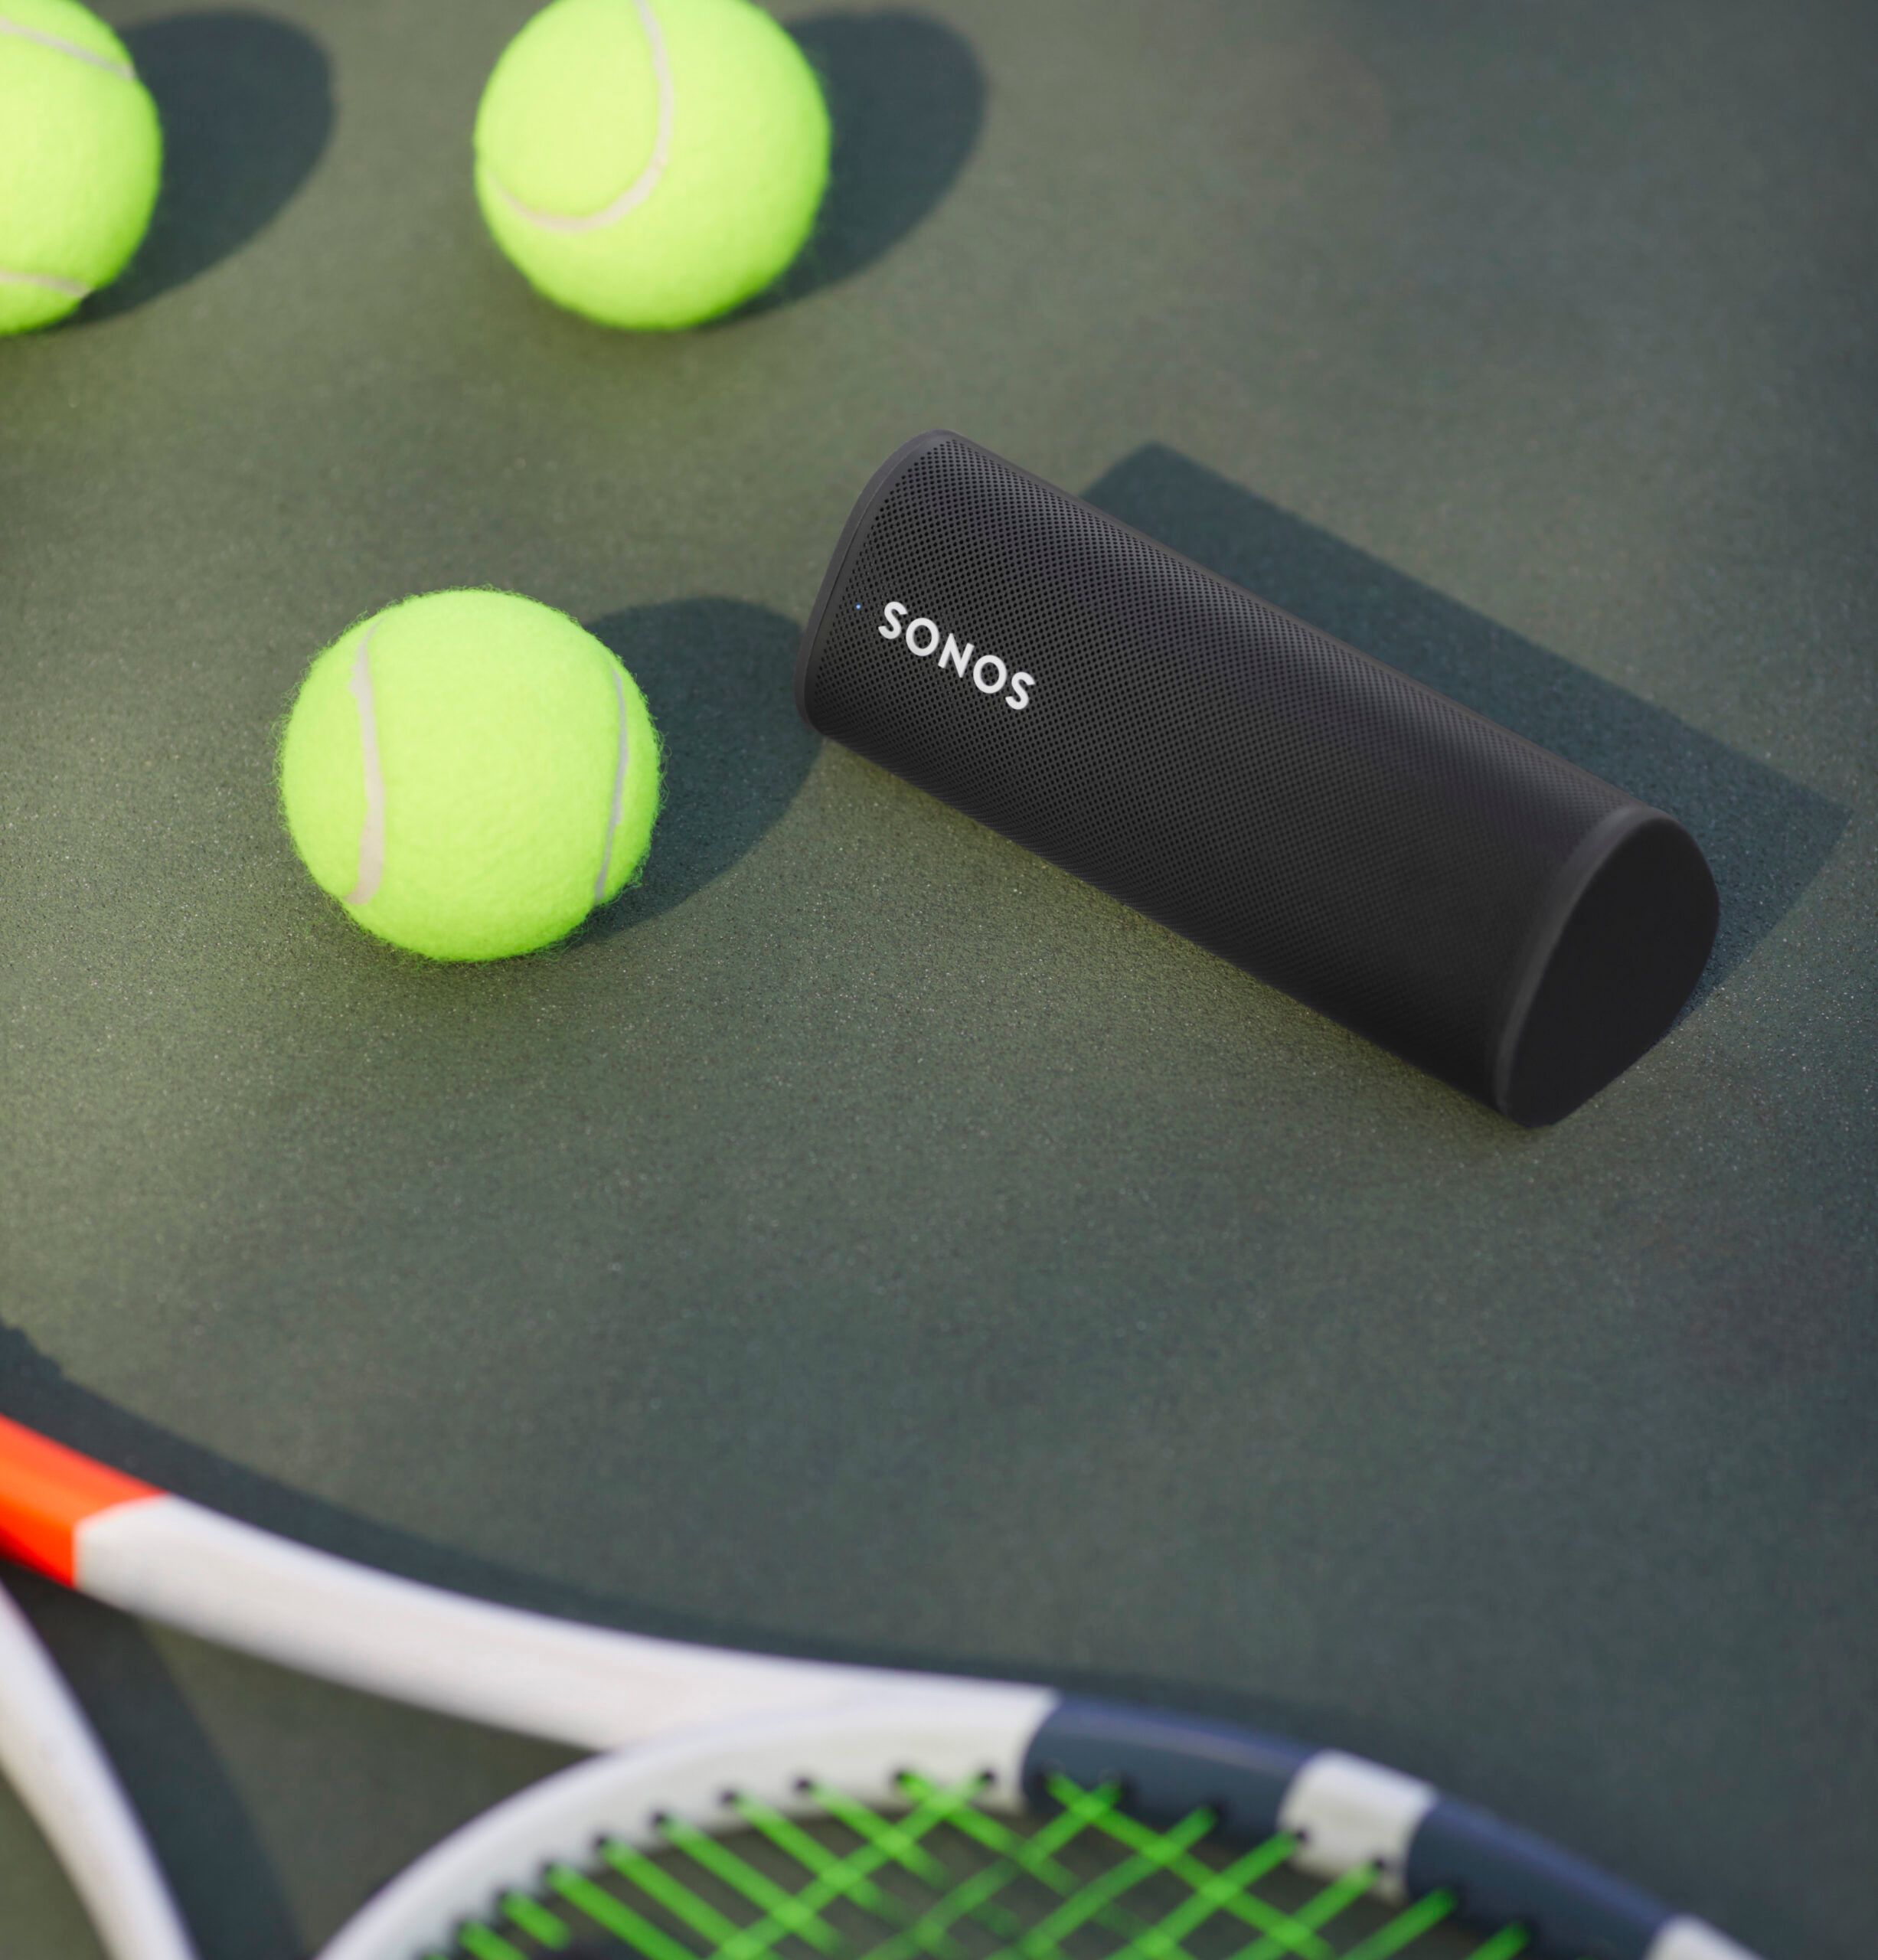 Sonos Roam next to tennis racket and tennis balls